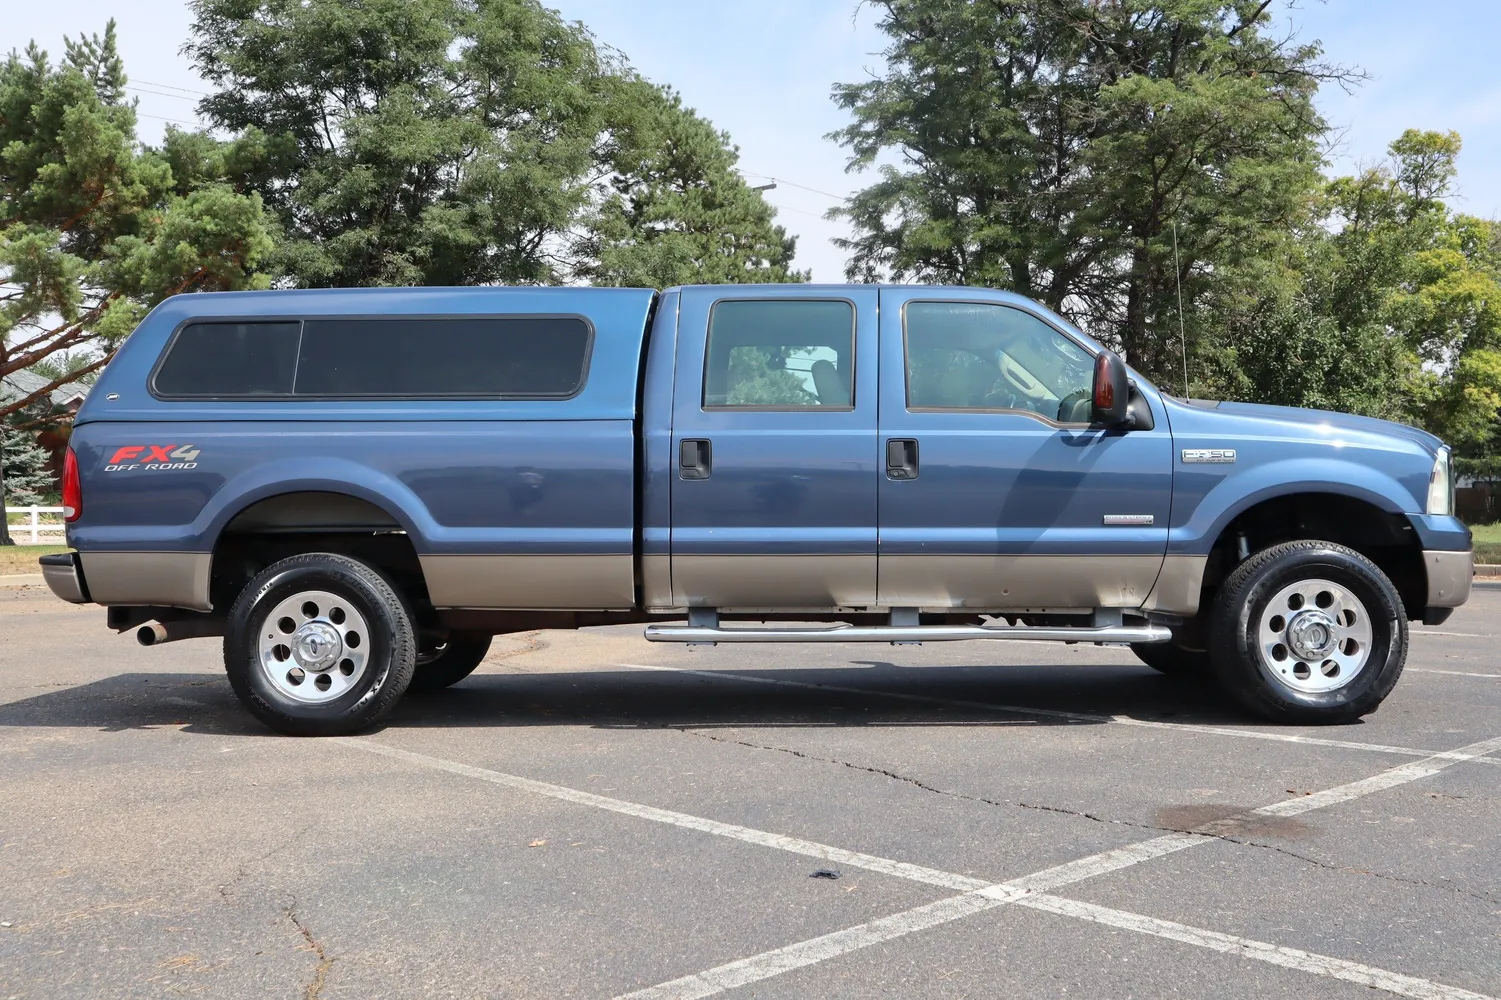 Ford Bronco Azure Gray Metallic 2023 Bronco (w/ new rock rails design) -- first look sighting IMG_4369-630x473